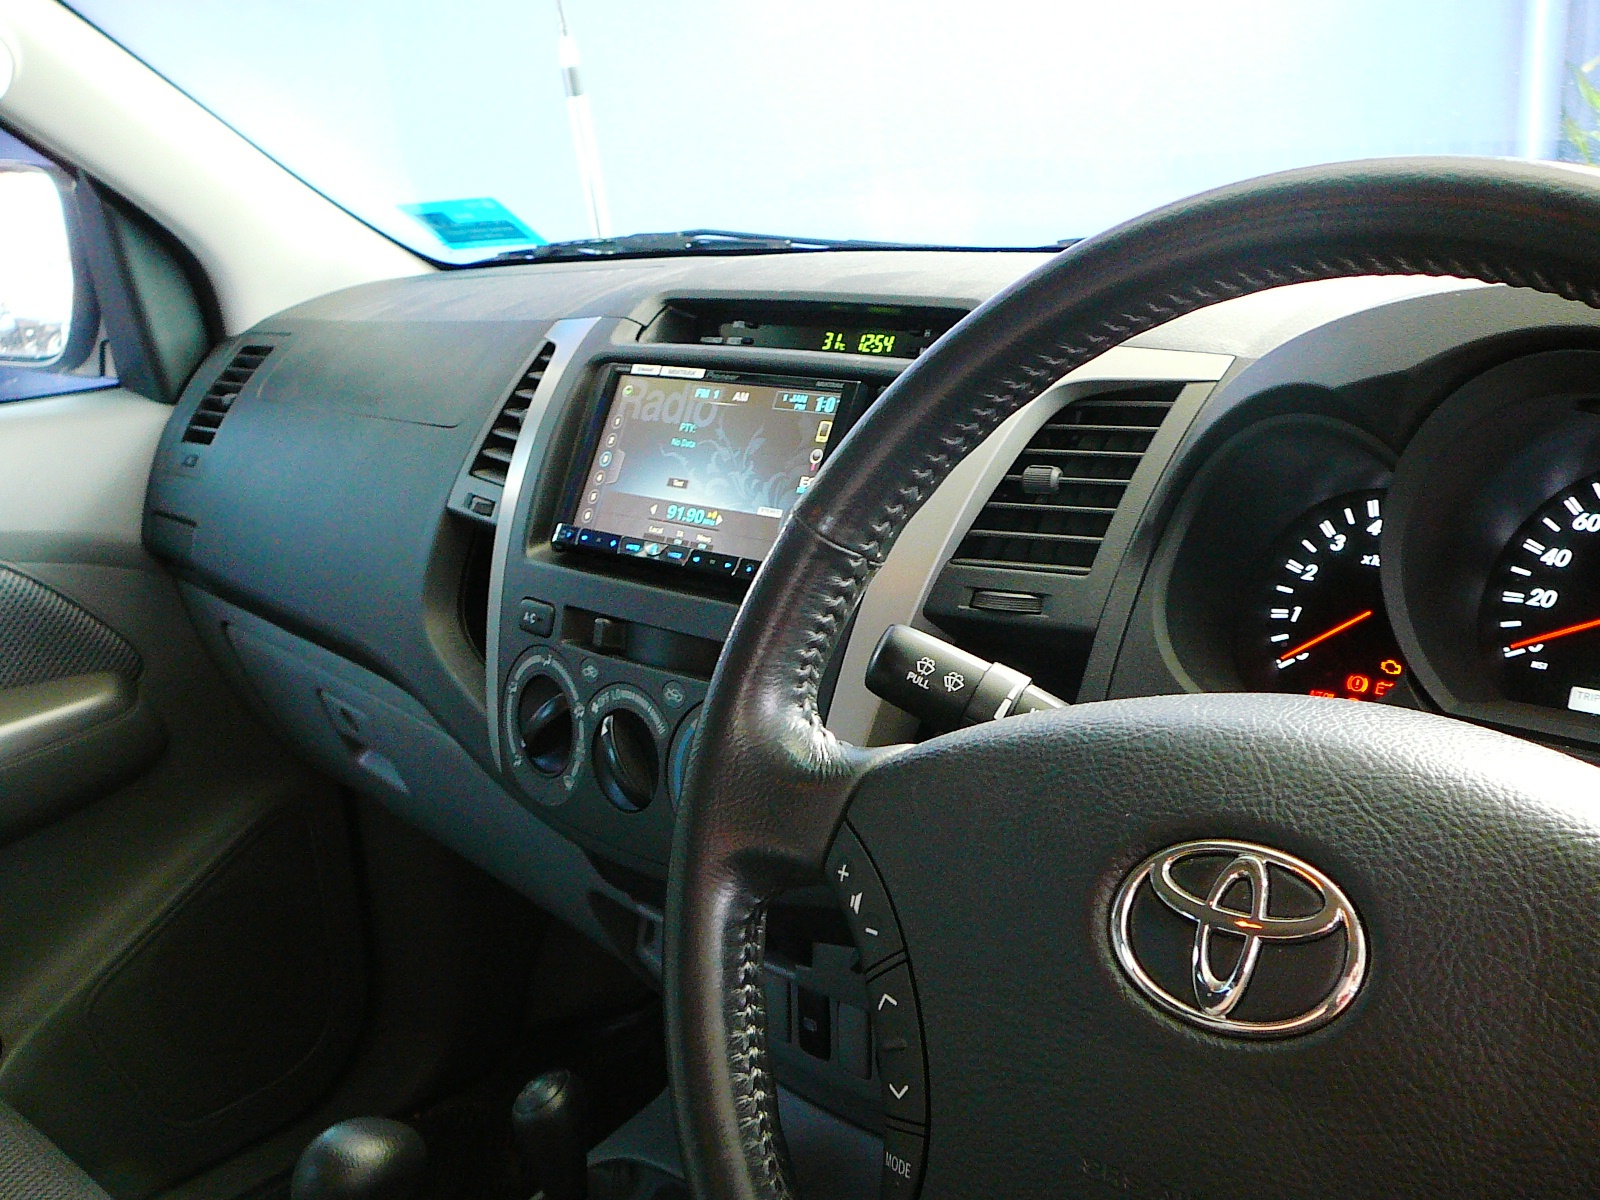 Toyota Hilux SR5, Pioneer audio visual unit and audio upgrade